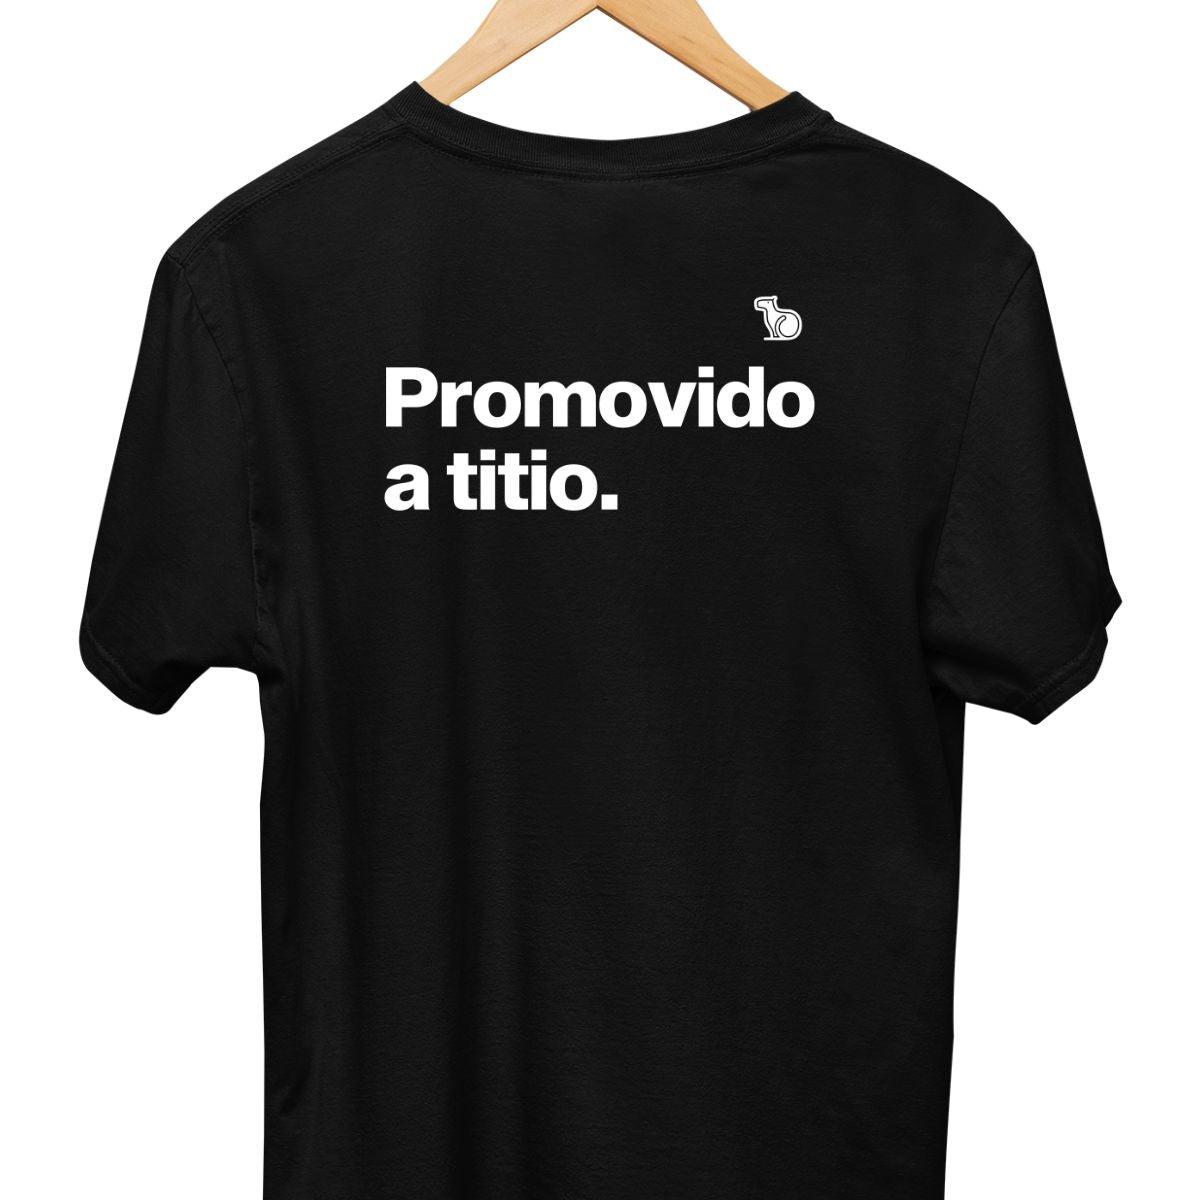 Camiseta com a frase "promovido a titio" masculina preta.